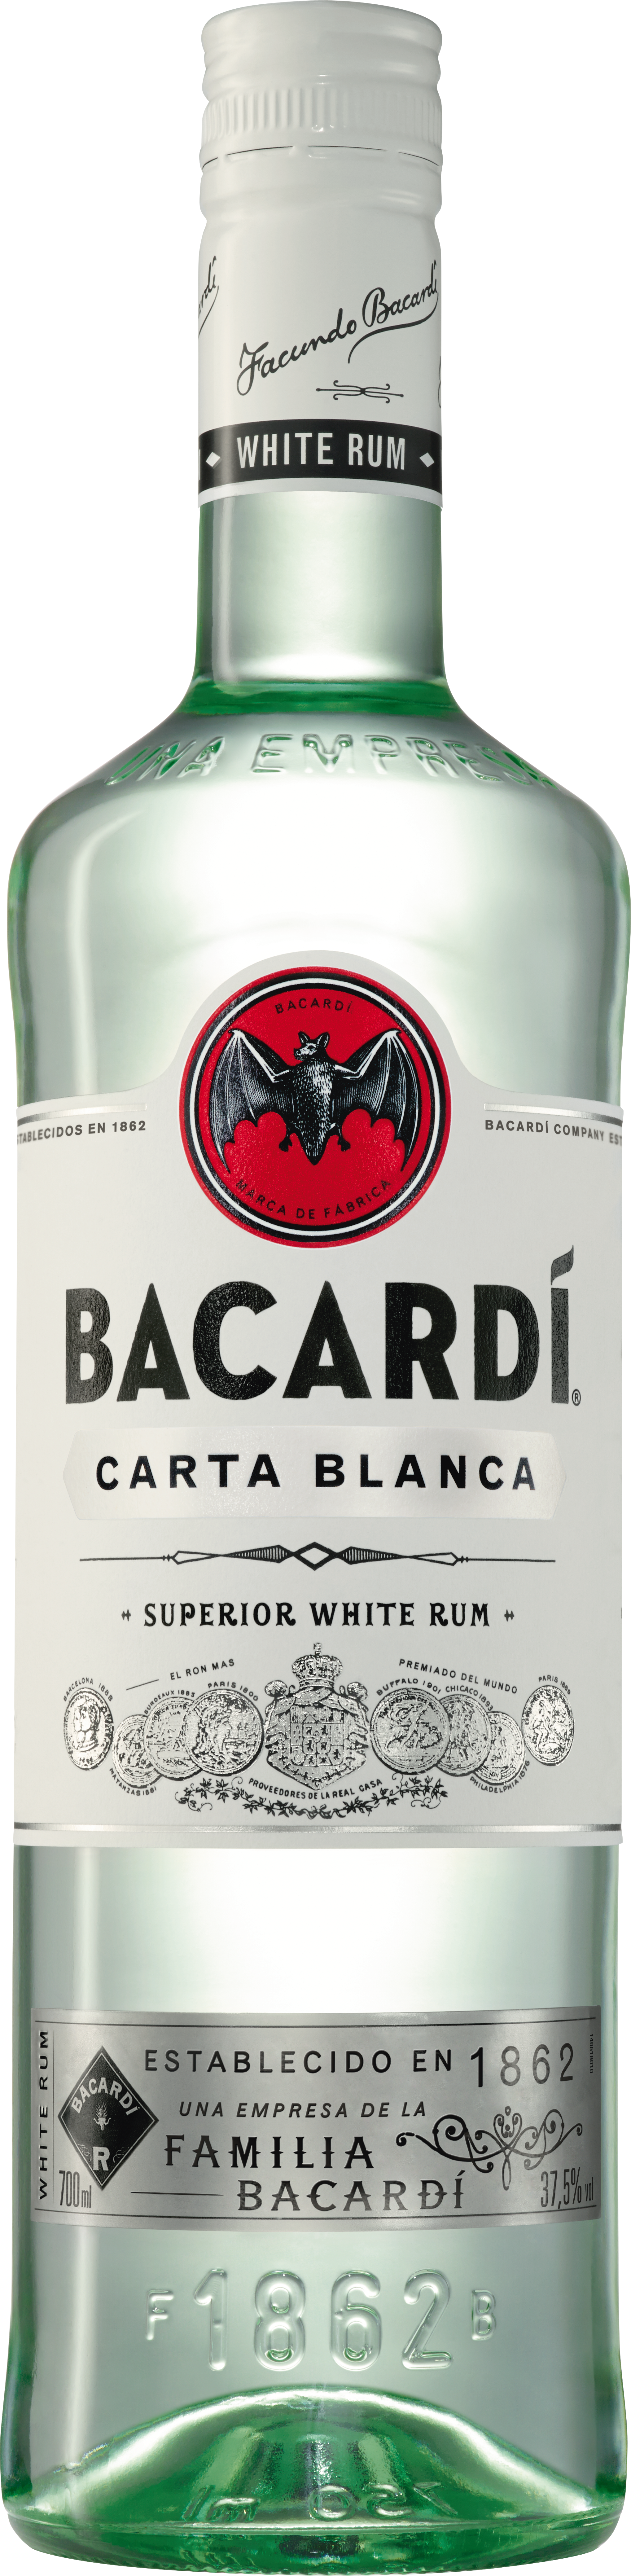 Bacardi Carta Blanca White Rum 37.5 % 1.0L